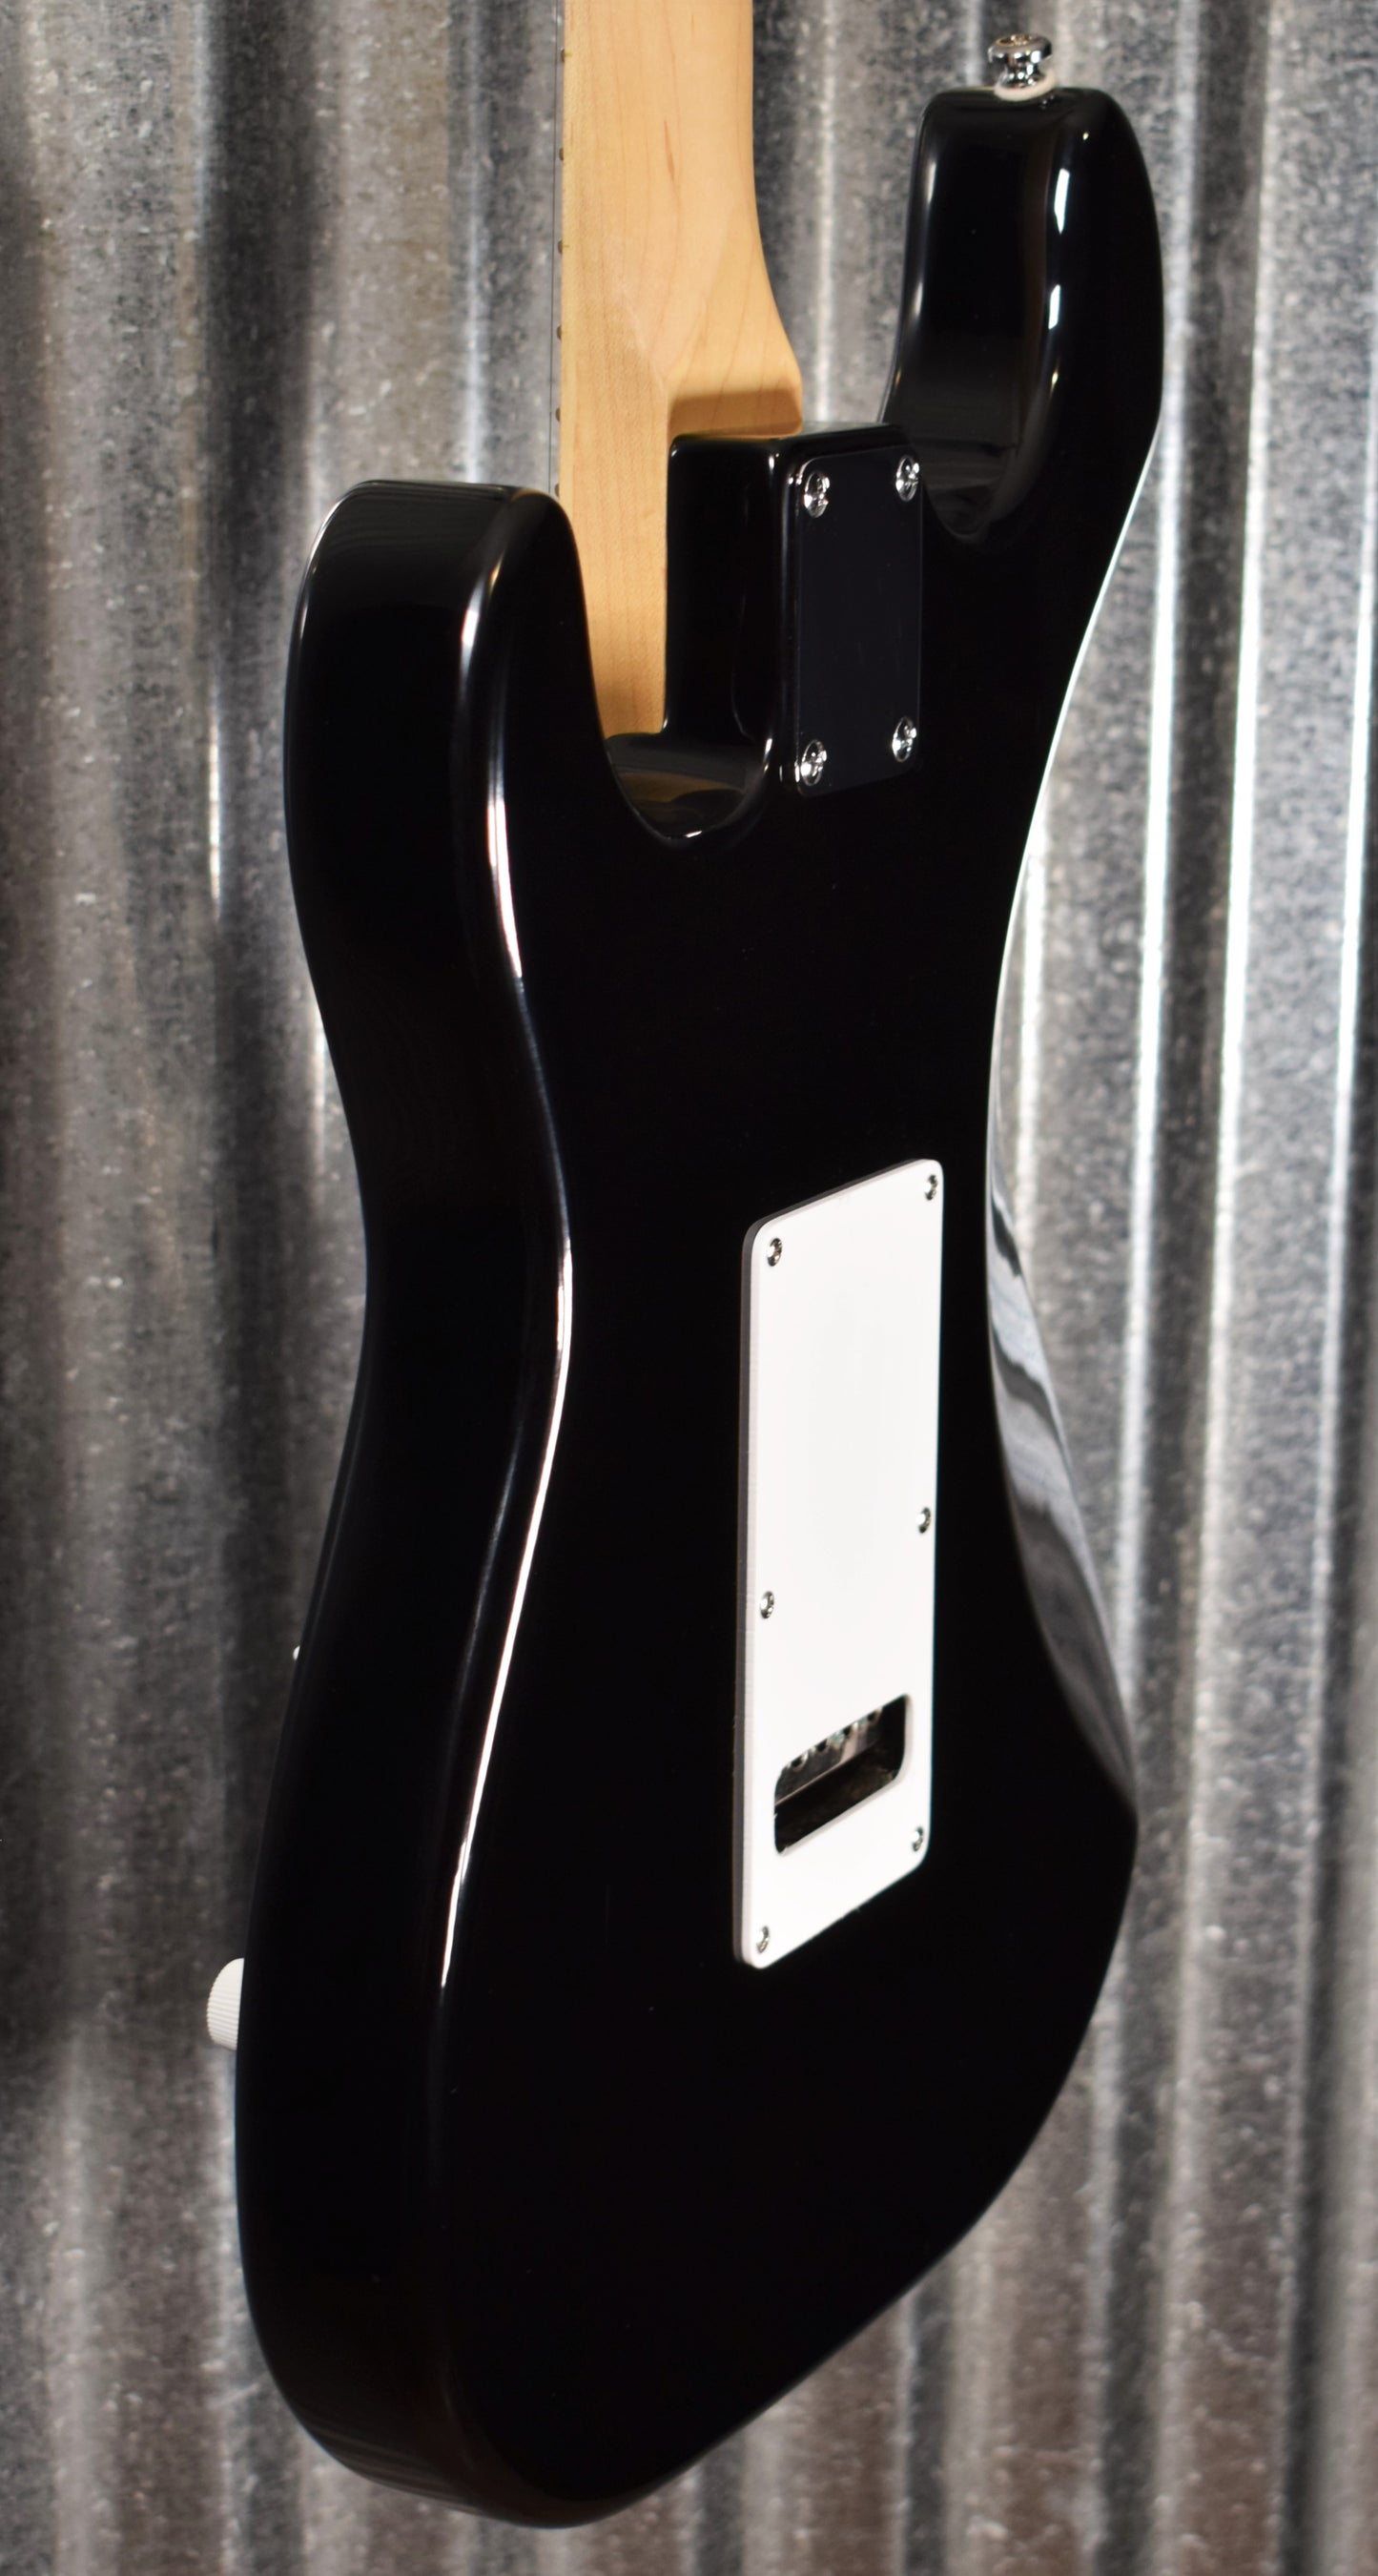 G&L Tribute Legacy Poplar Gloss Black Guitar #3312 Demo